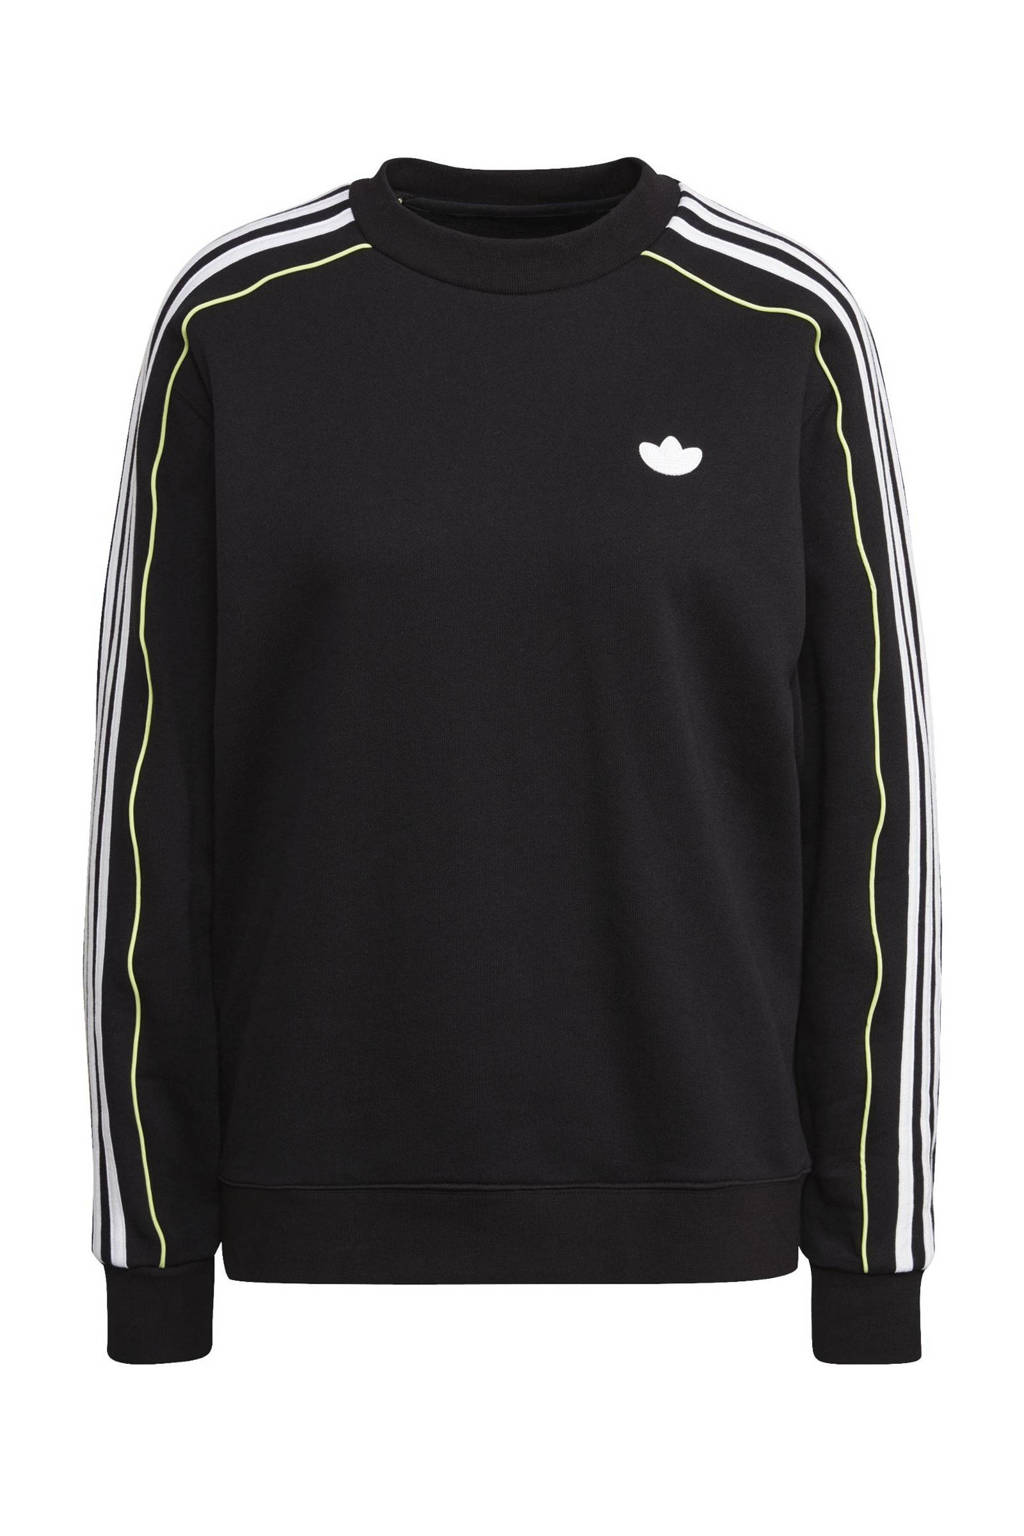 adidas Originals sweater zwart/wit/geel, Zwart/wit/geel